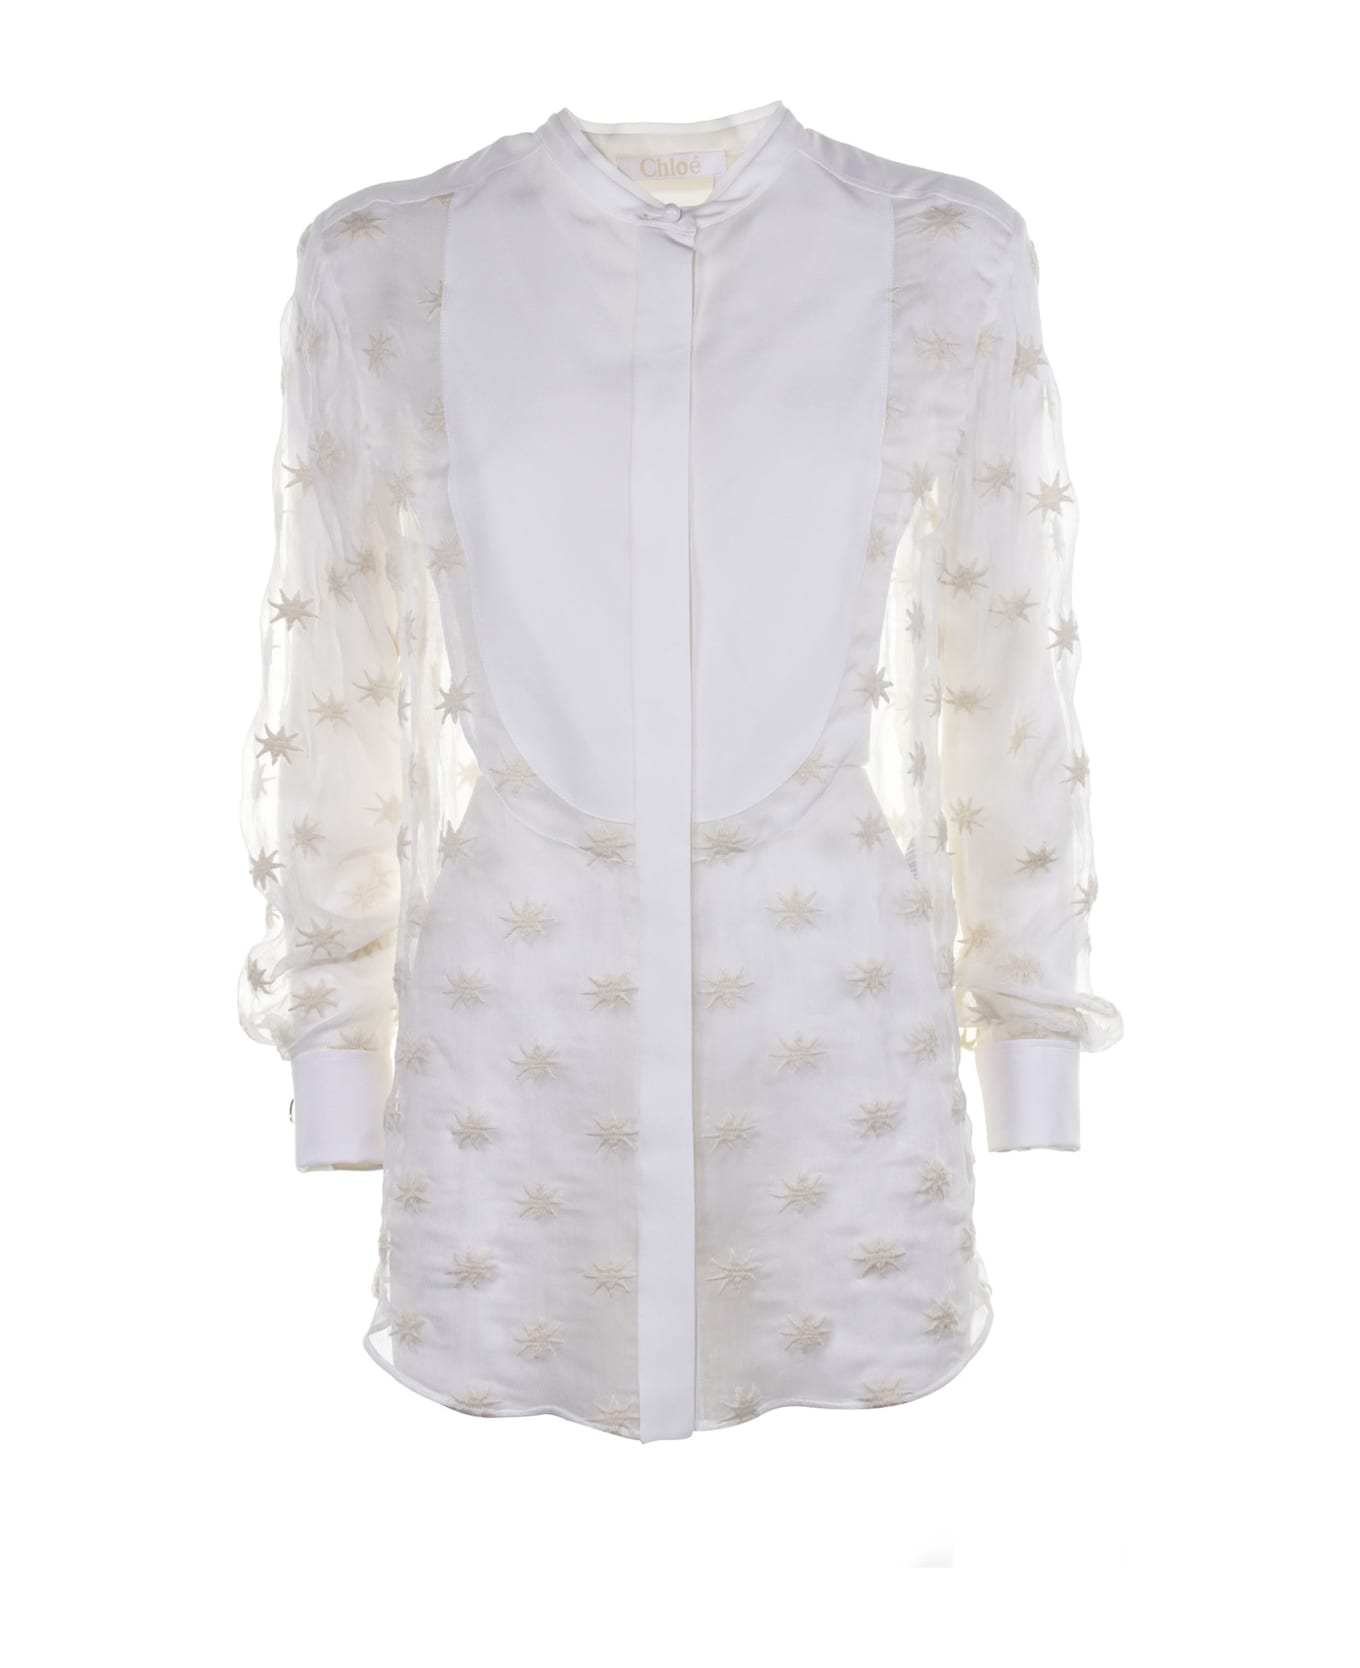 Chloé Shirt In White Silk - ICONIC MILK ブラウス